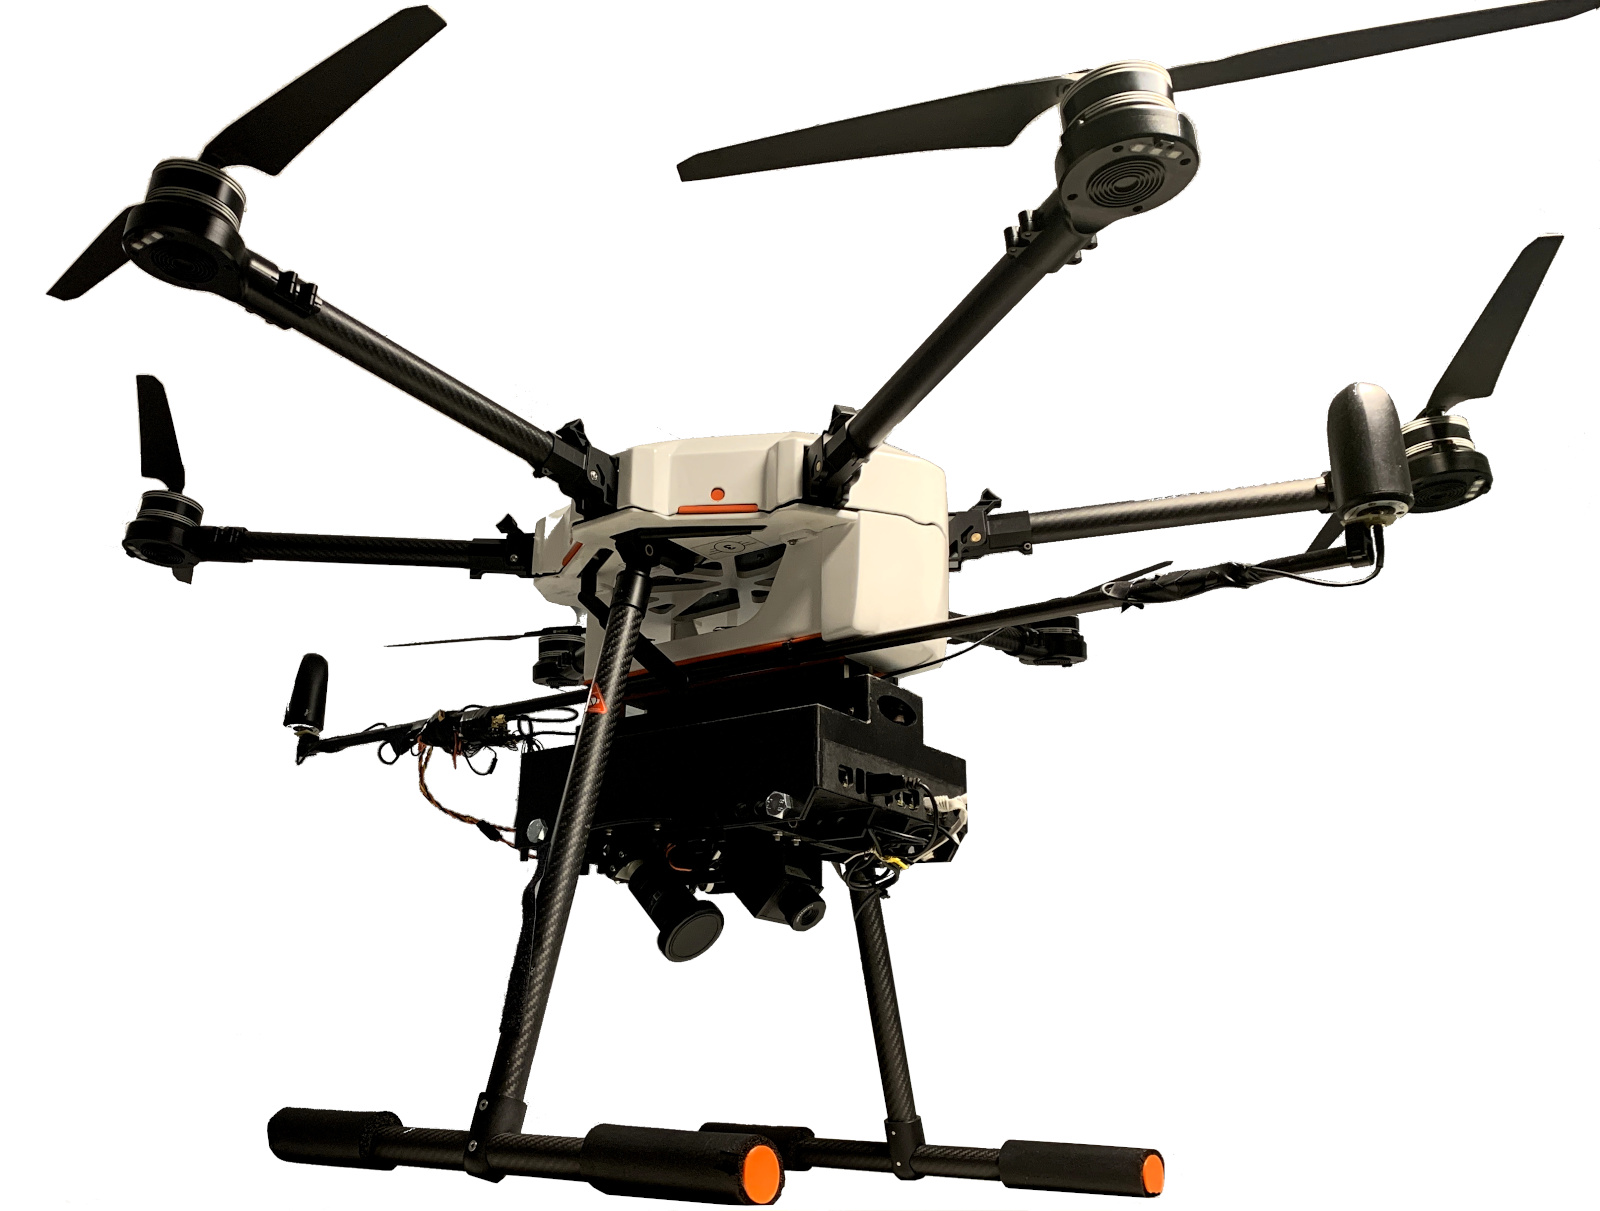 HEIFU multicopter with MR sensor pod